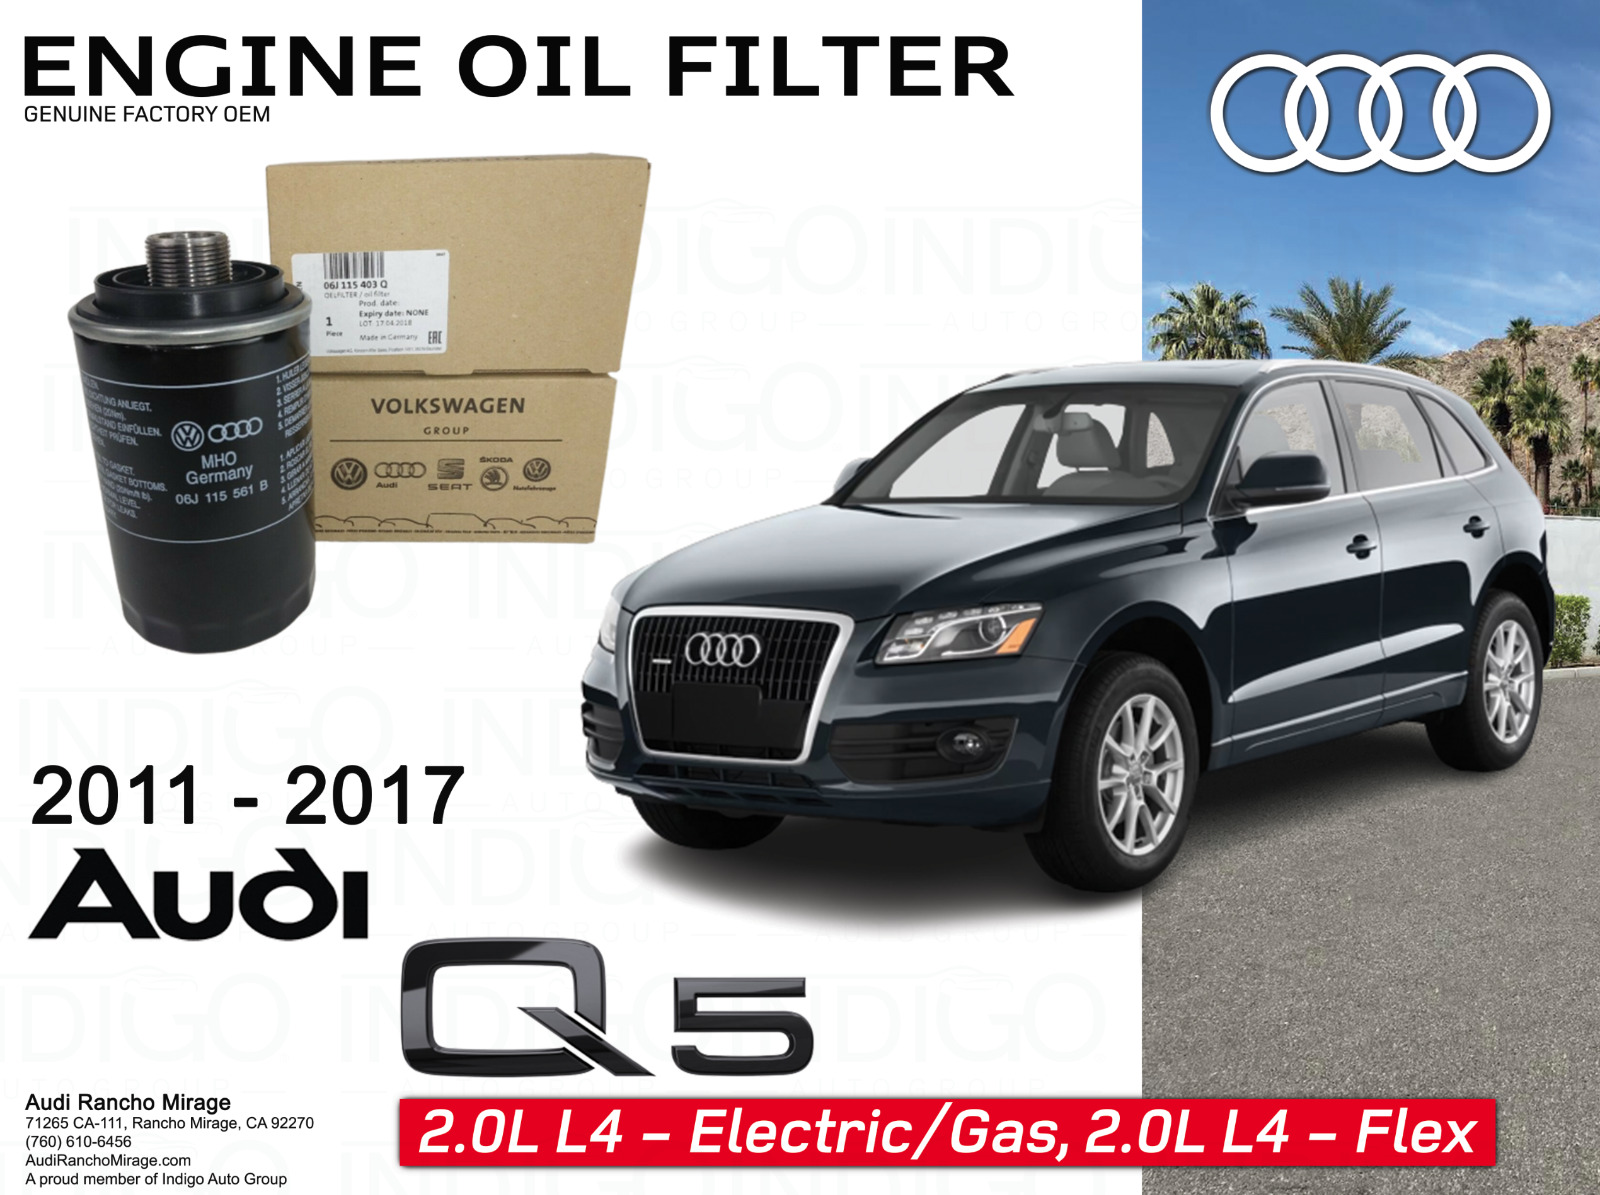 2011-2017 Audi Q5 with 2.0L TURBO Engines Genuine Audi Oil Filter Q5-06J115403Q